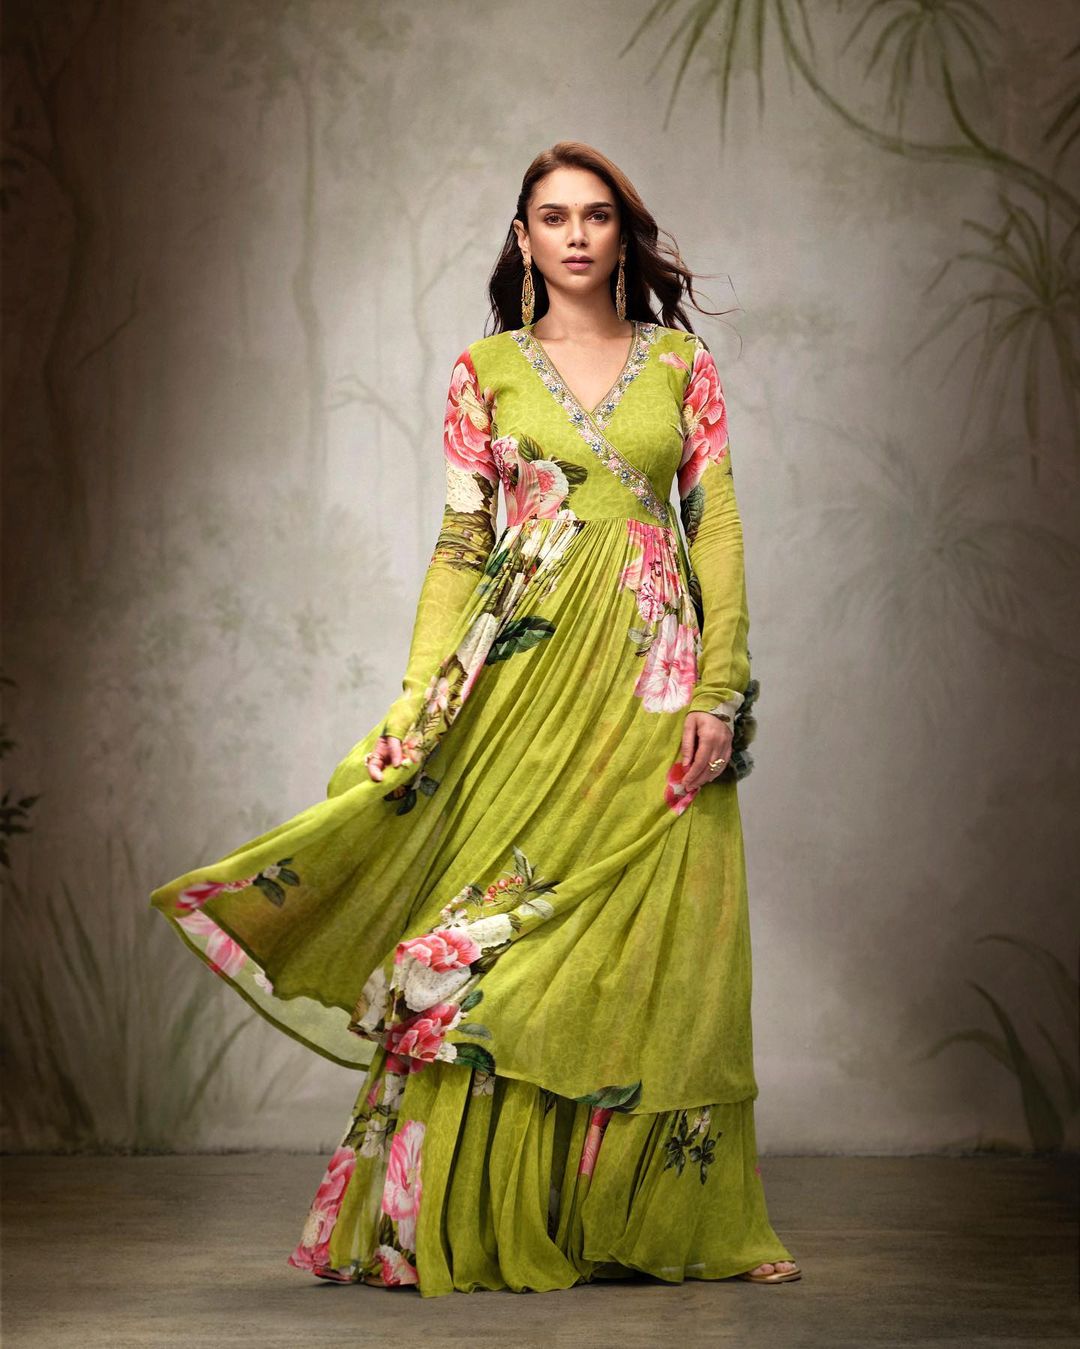 aditi-rao-hydari-in-floral-angrakha-kurta-and-palazzo-looks-drop-dead-gorgeous-summer-fashion